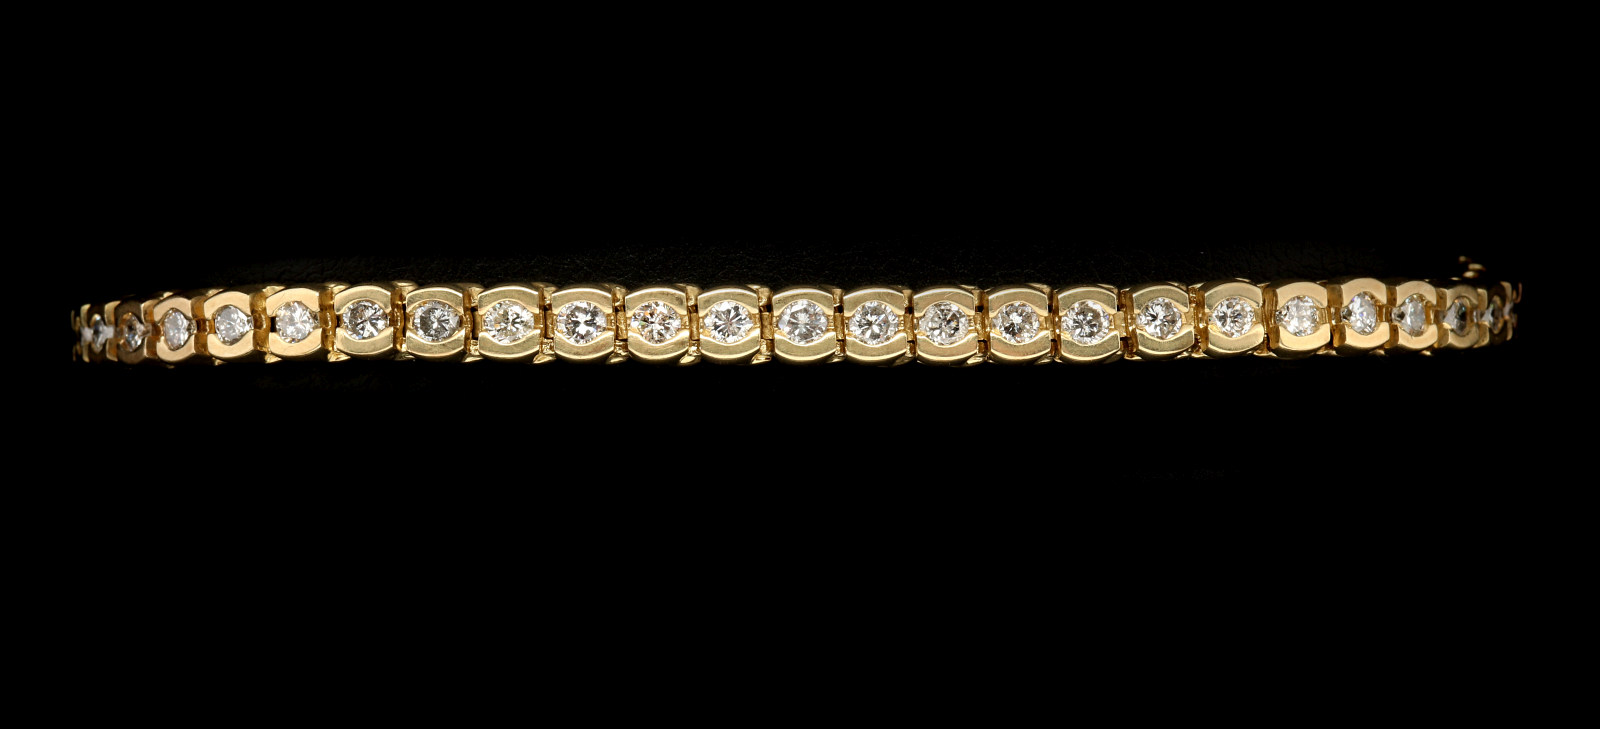 A 14K GOLD AND DIAMOND TENNIS BRACELET 3 CT T.W.